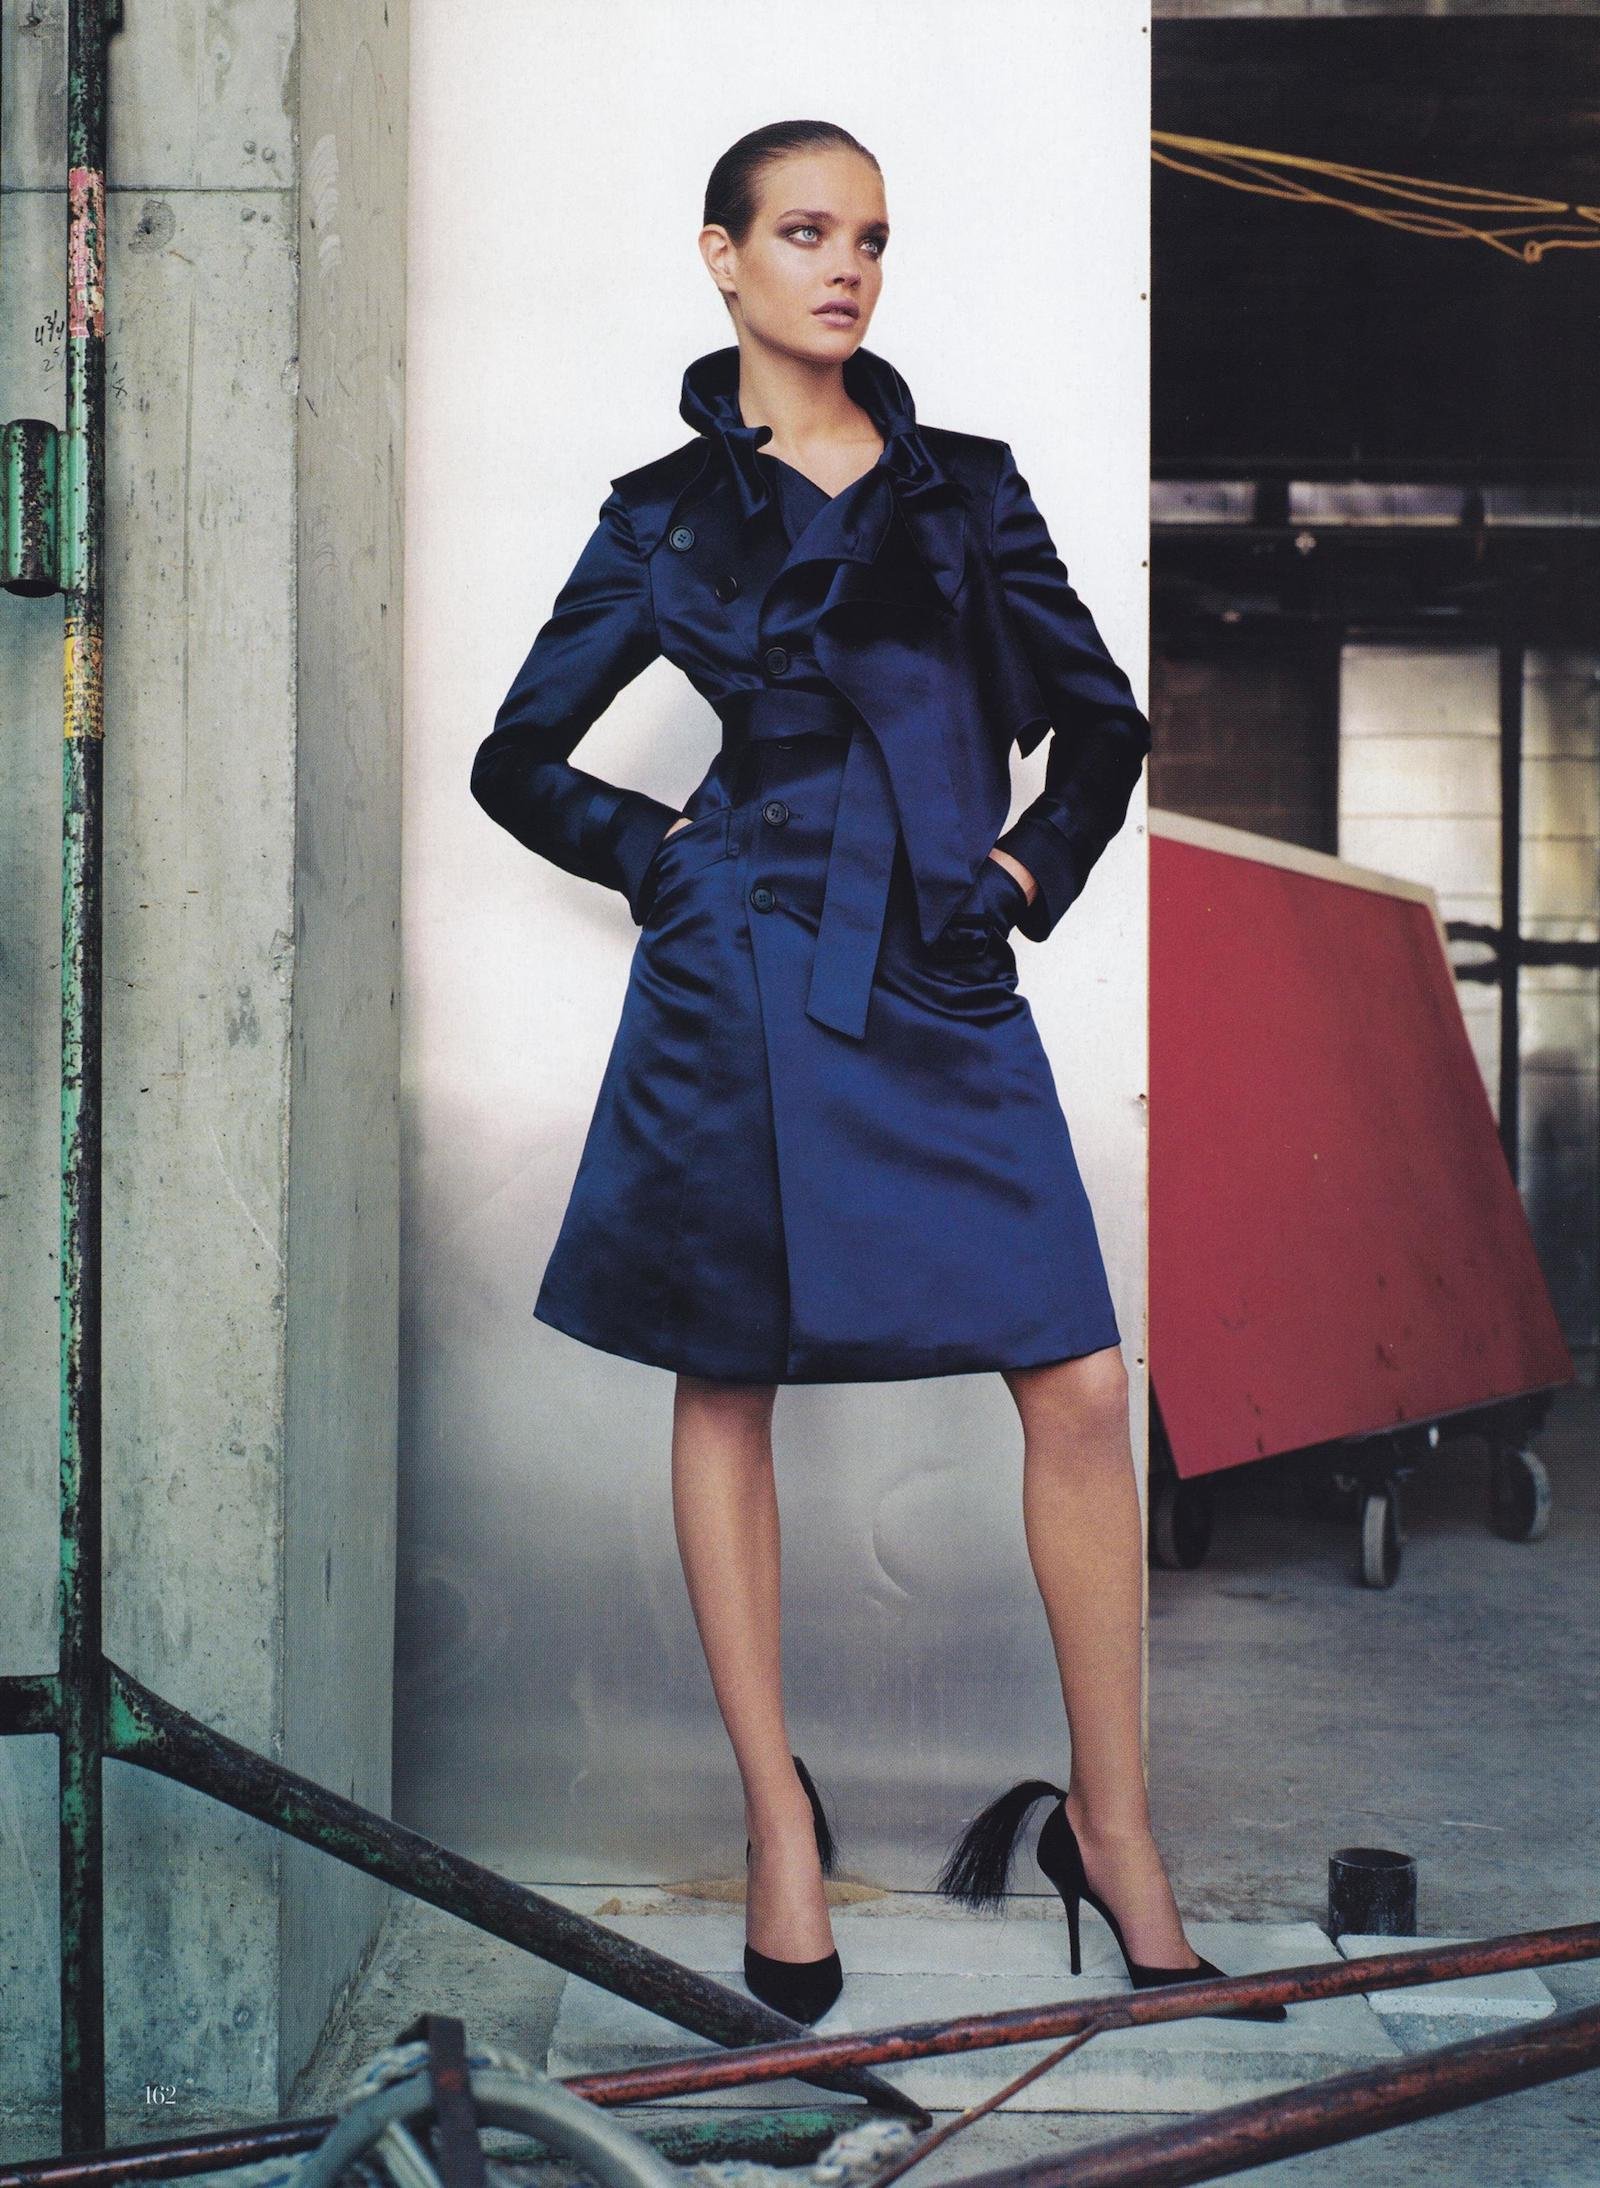 Natalia-Vodianova-by-Patrick-Demarchelier-Vogue-US-July-2004-5.jpeg